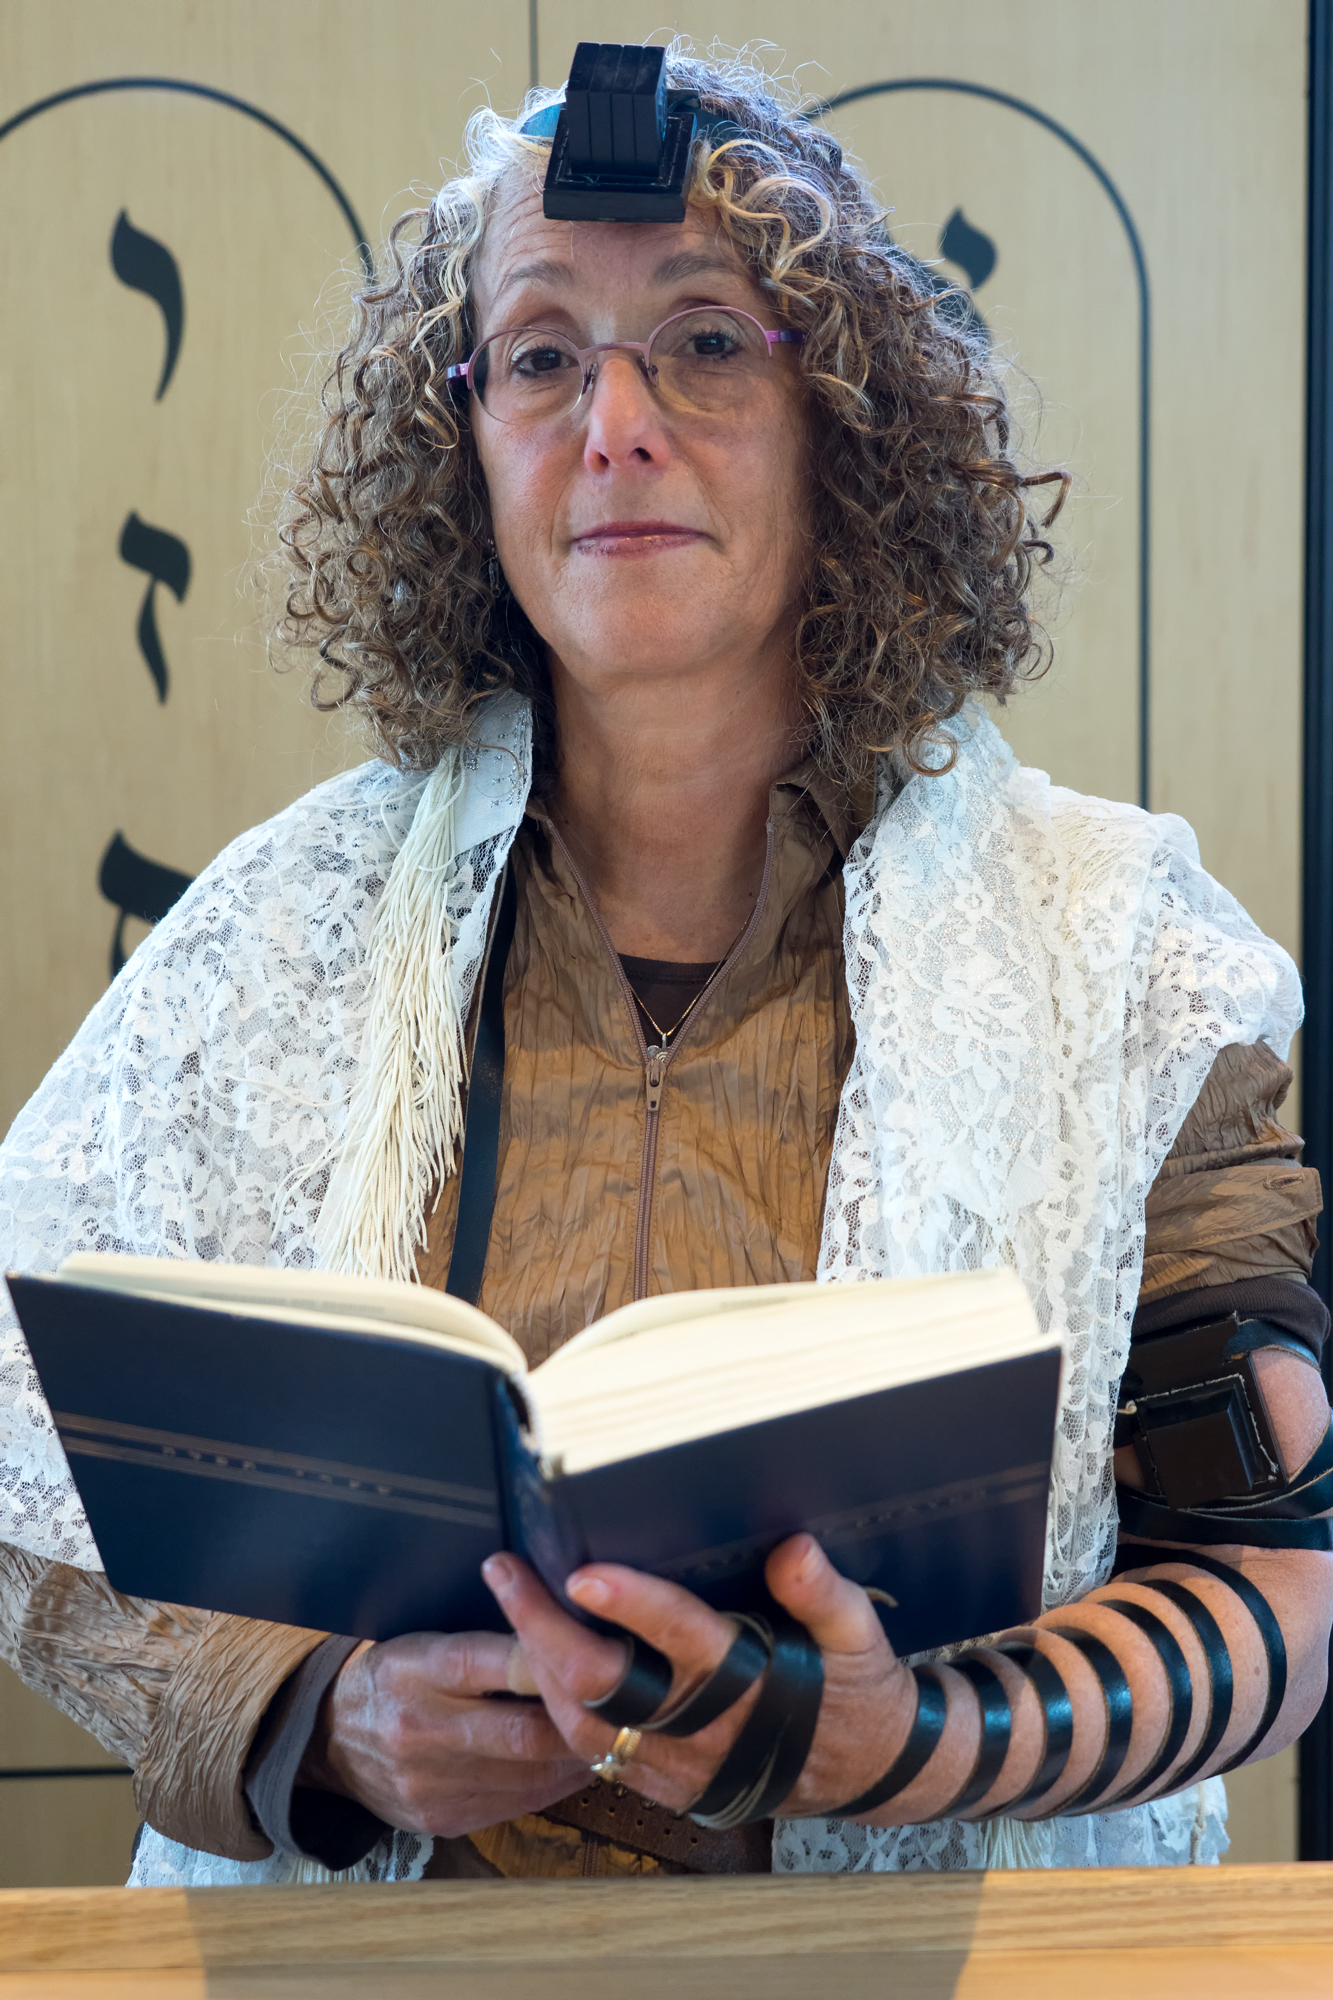 Rabbi Elyse Goldstein wearing tefillin